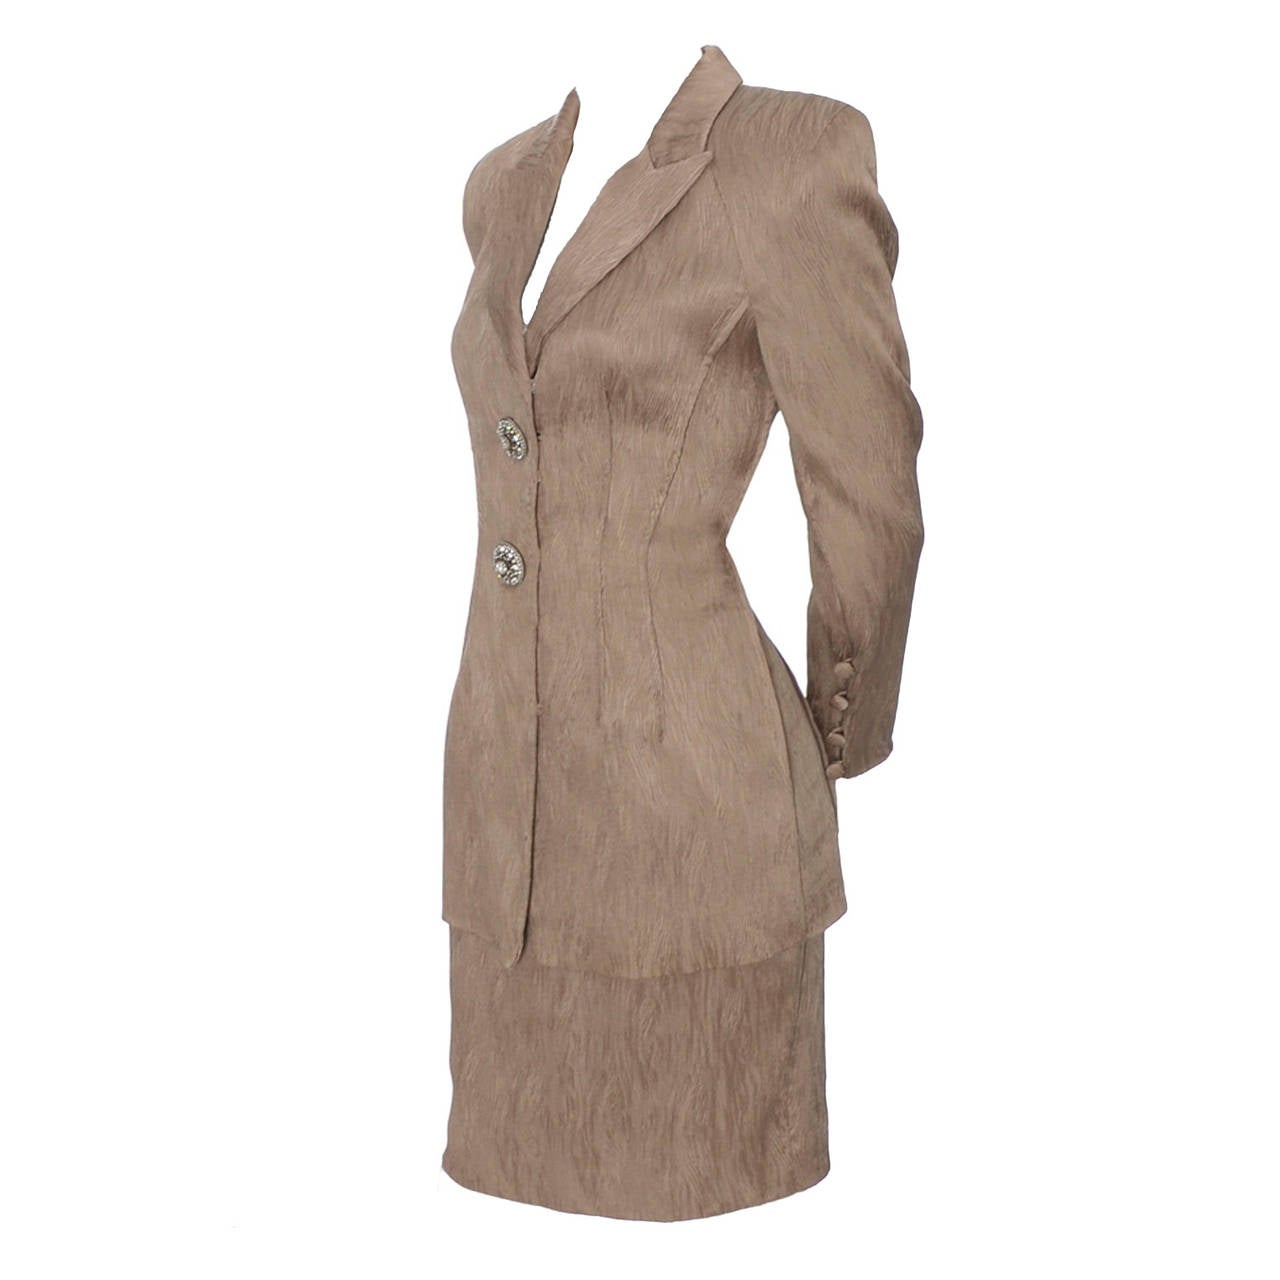 Badgley Mischka Vintage Evening Silk Skirt Suit Rhinestone Buttons Size 4